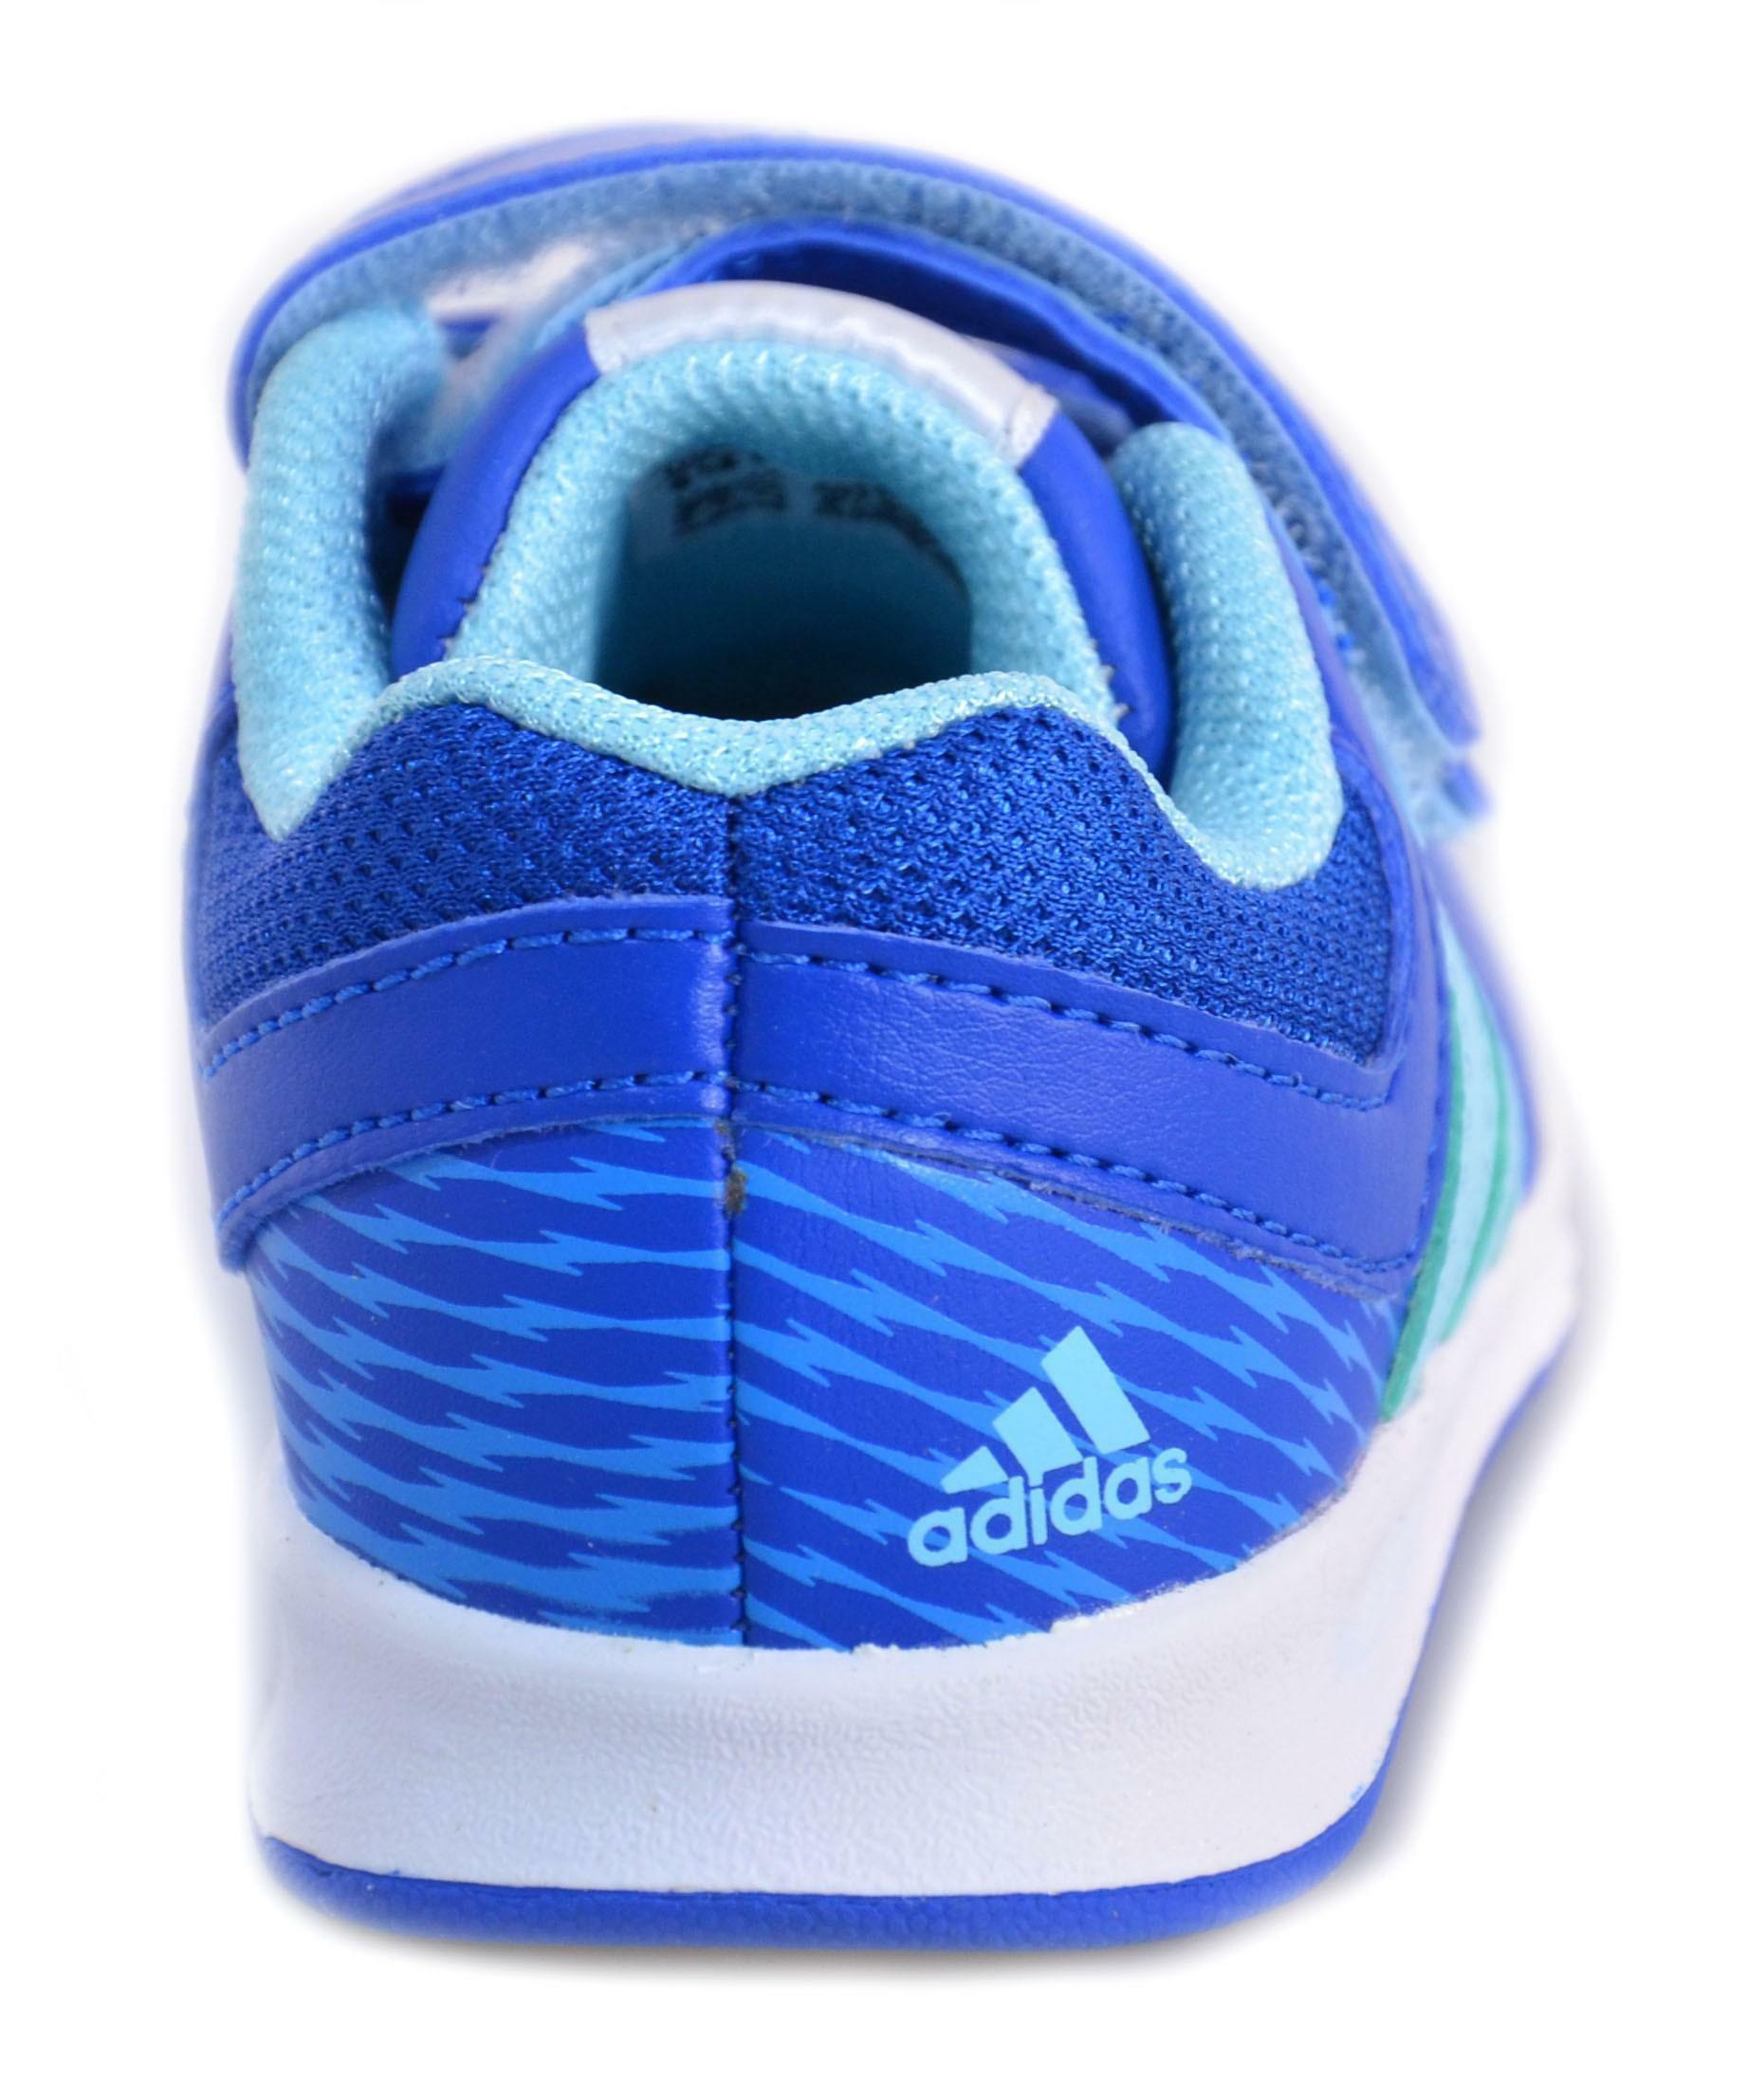 adidas adidas lk trainer 6 cf i scarpe bambino azzurre pelle strappi m20053